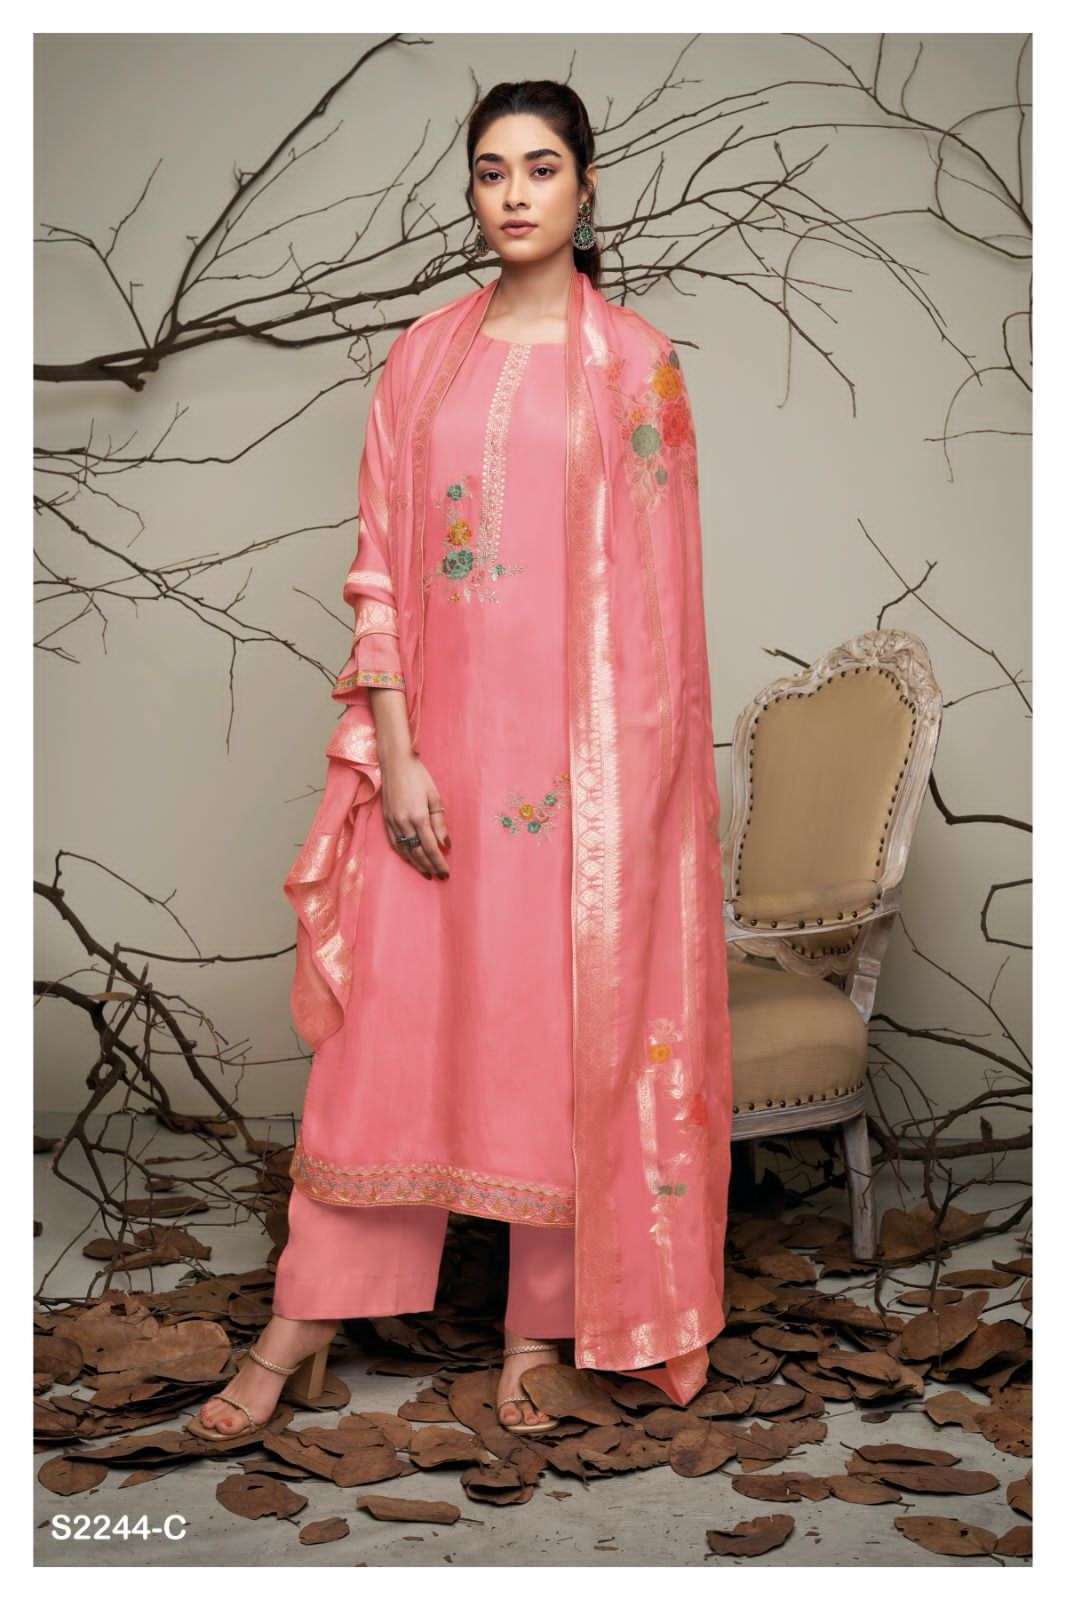 ganga georgia 2244 colour series designer wedding wear salwar kameez wholesaler surat gujarat